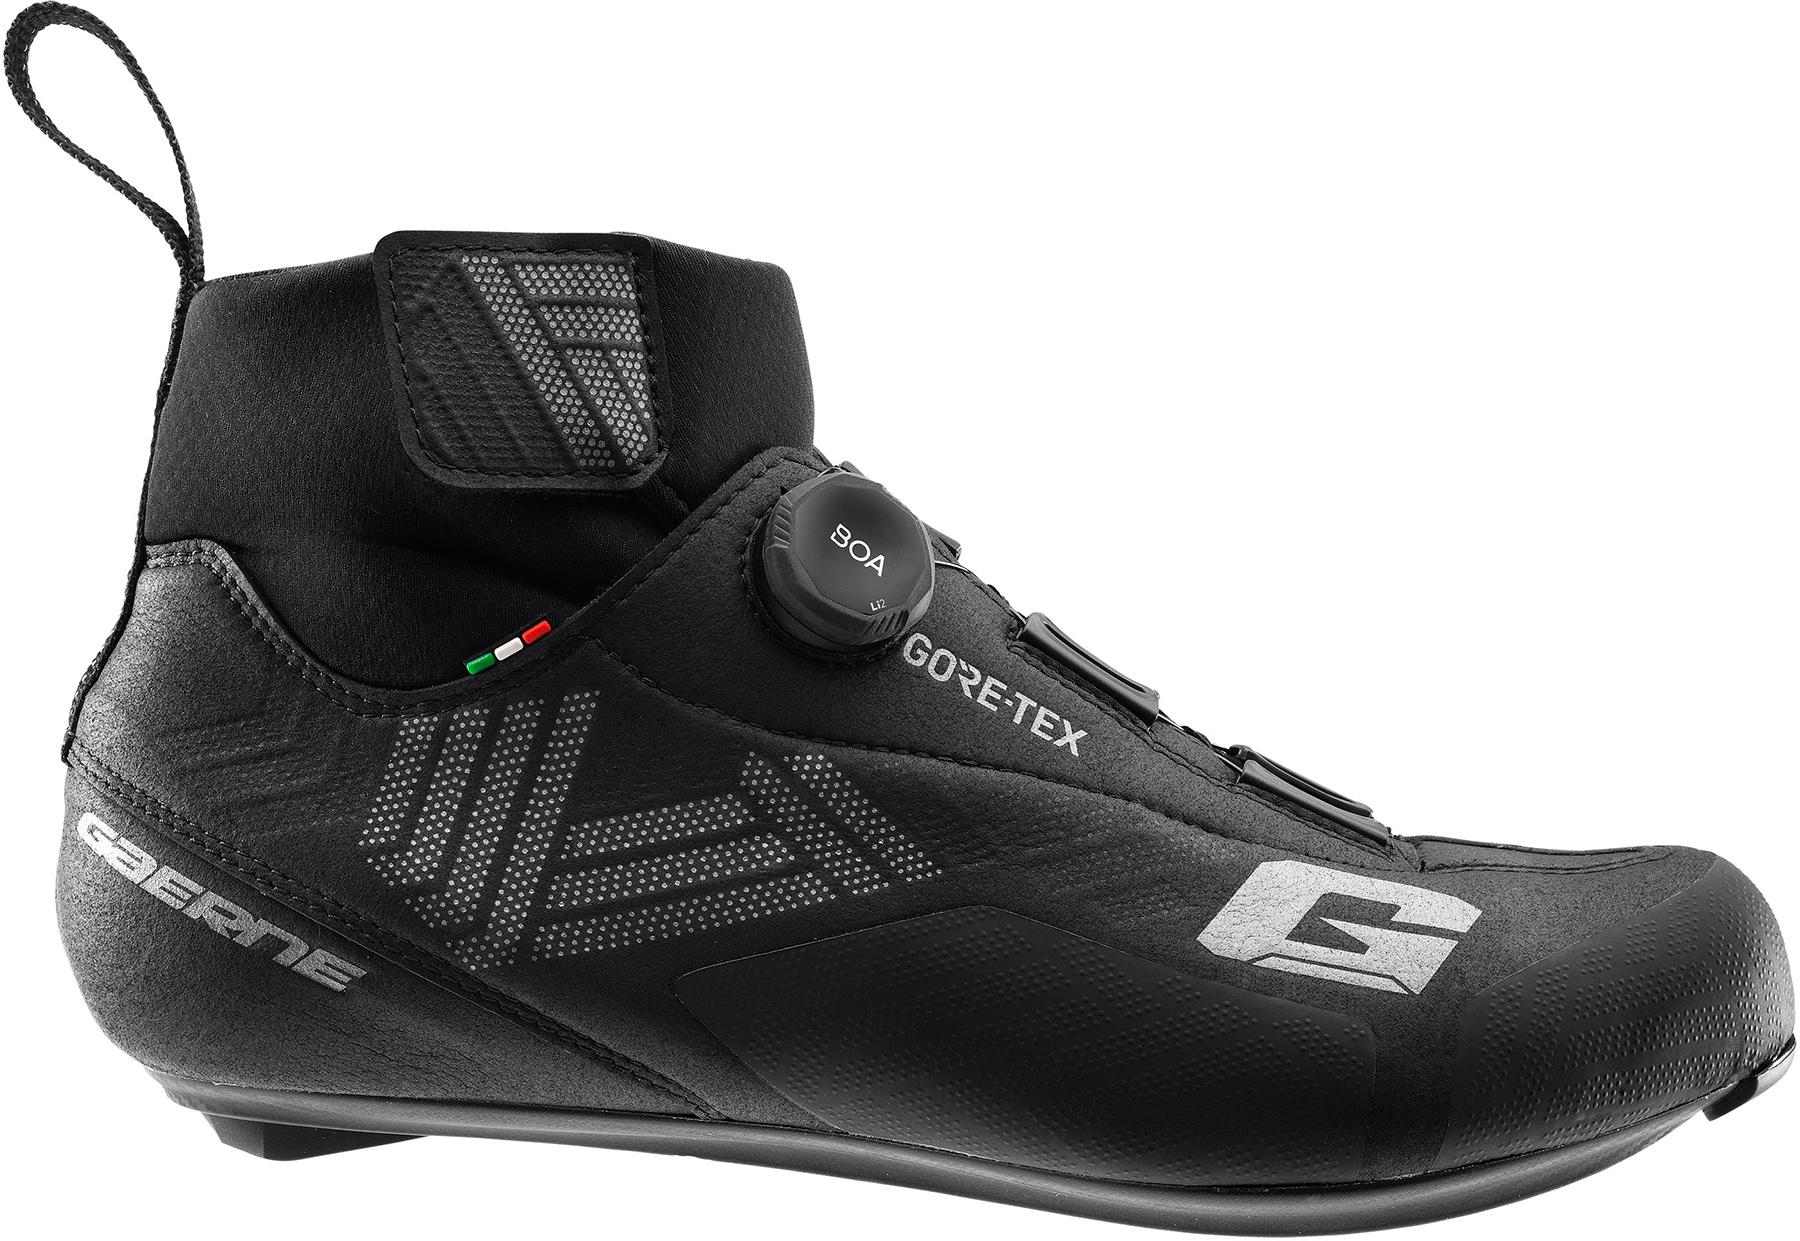 Gaerne Icestorm Road Goretex Boots 1.0 - Black